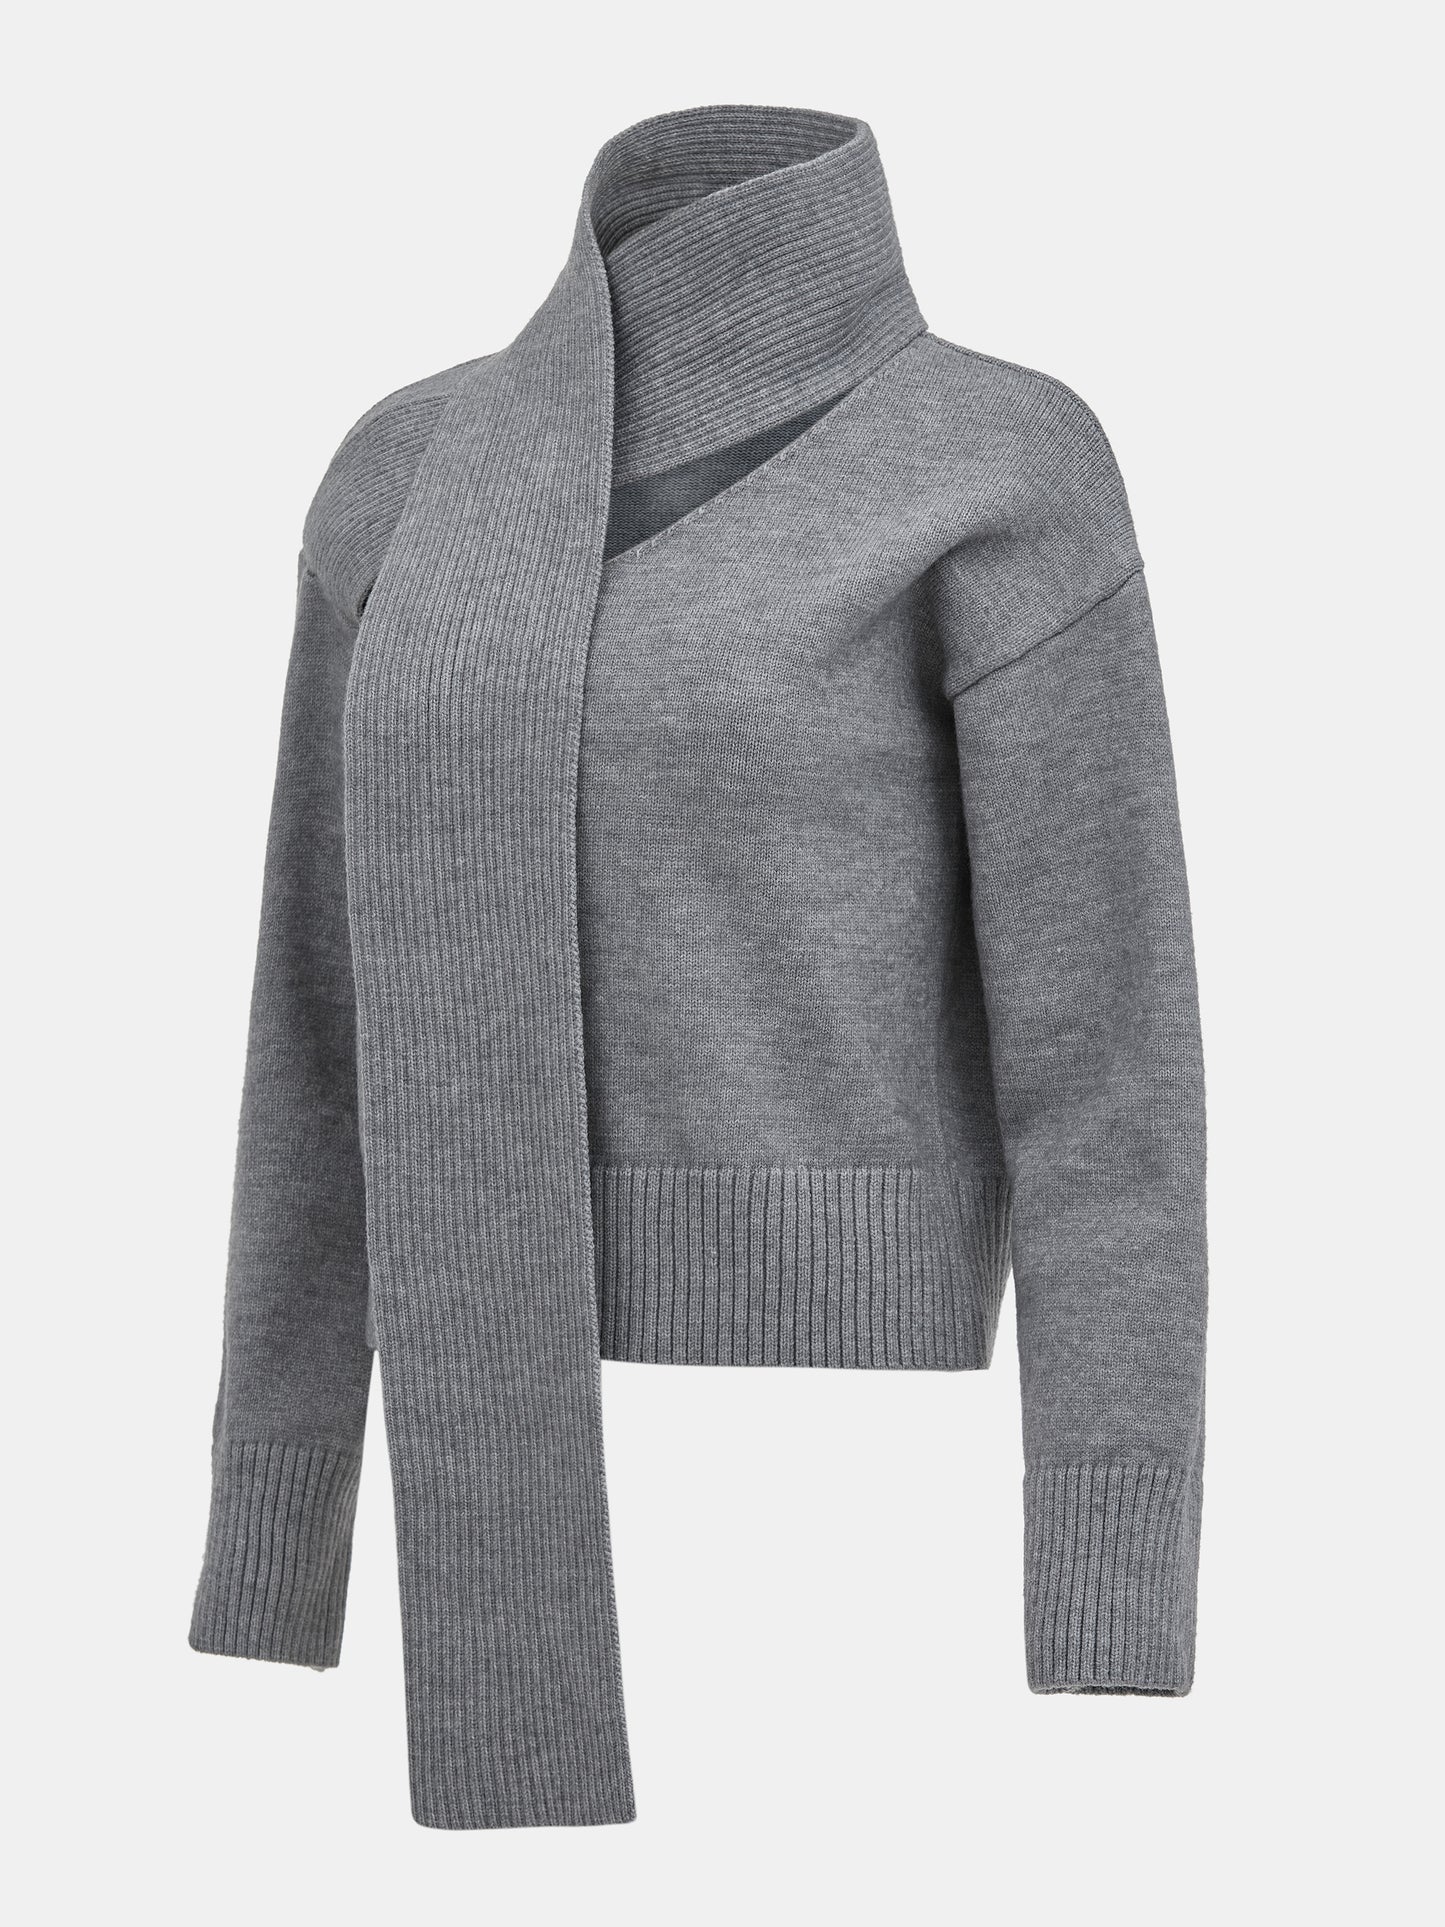 Scarf Knit Top, Grey